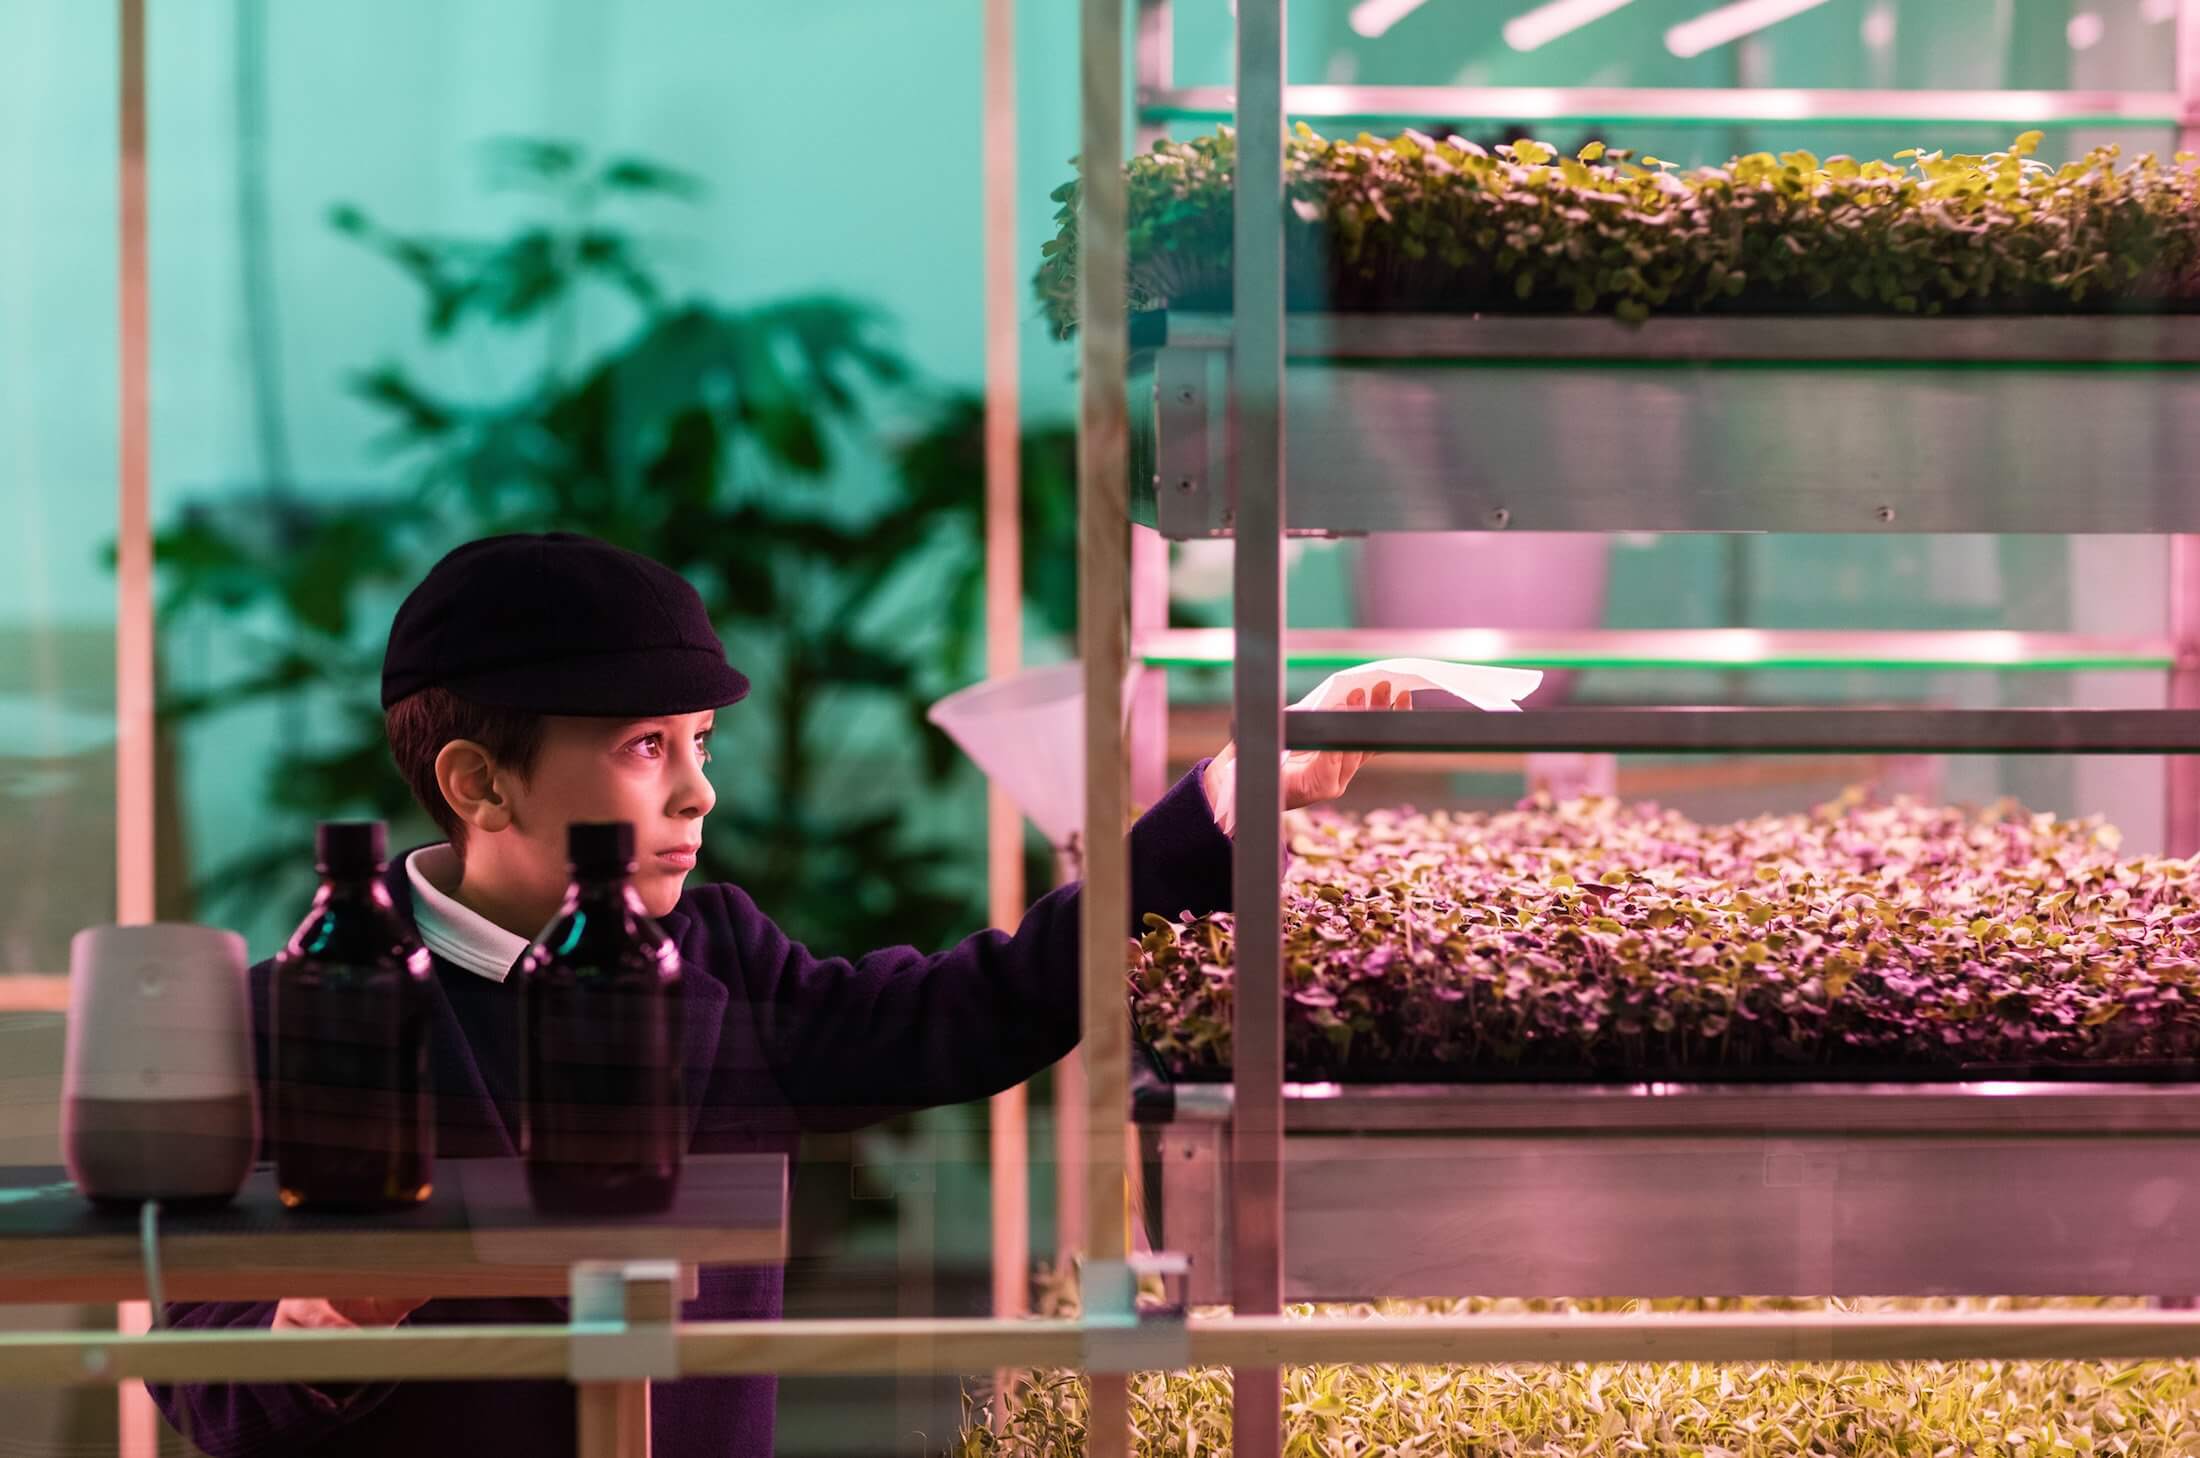 Ikea indoor farm grows greens 3 times faster as a garden (1)